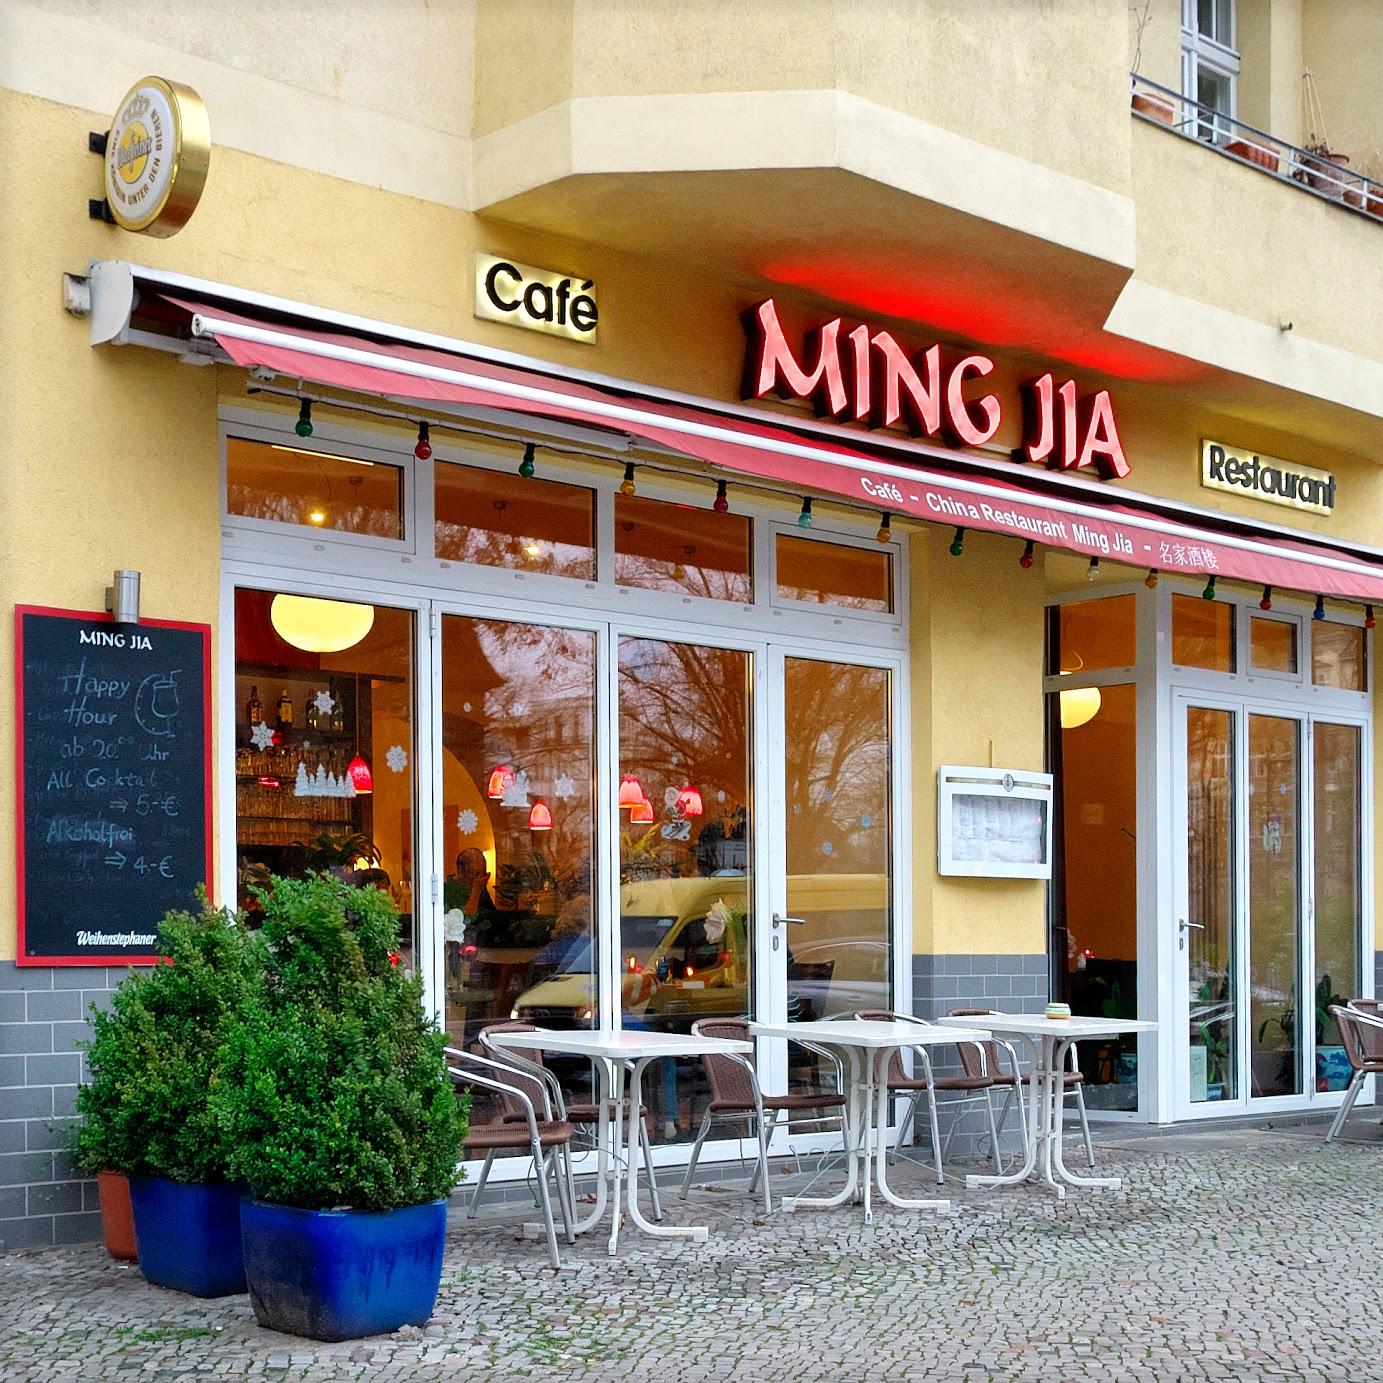 Restaurant "Ming Jia" in Berlin